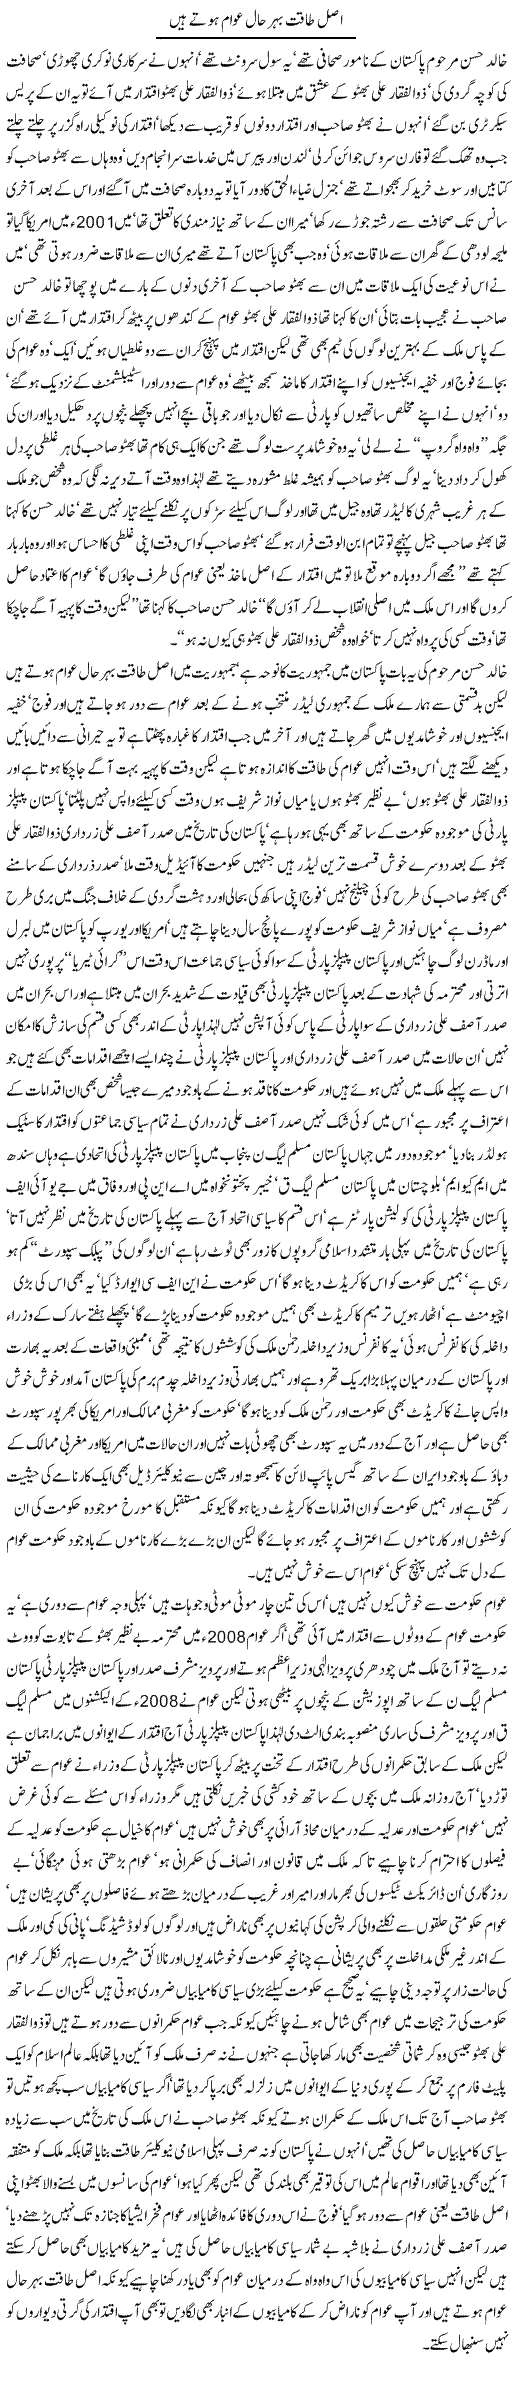 Awam ki Takat Express Column Javed Chaudhry 29 June 2010